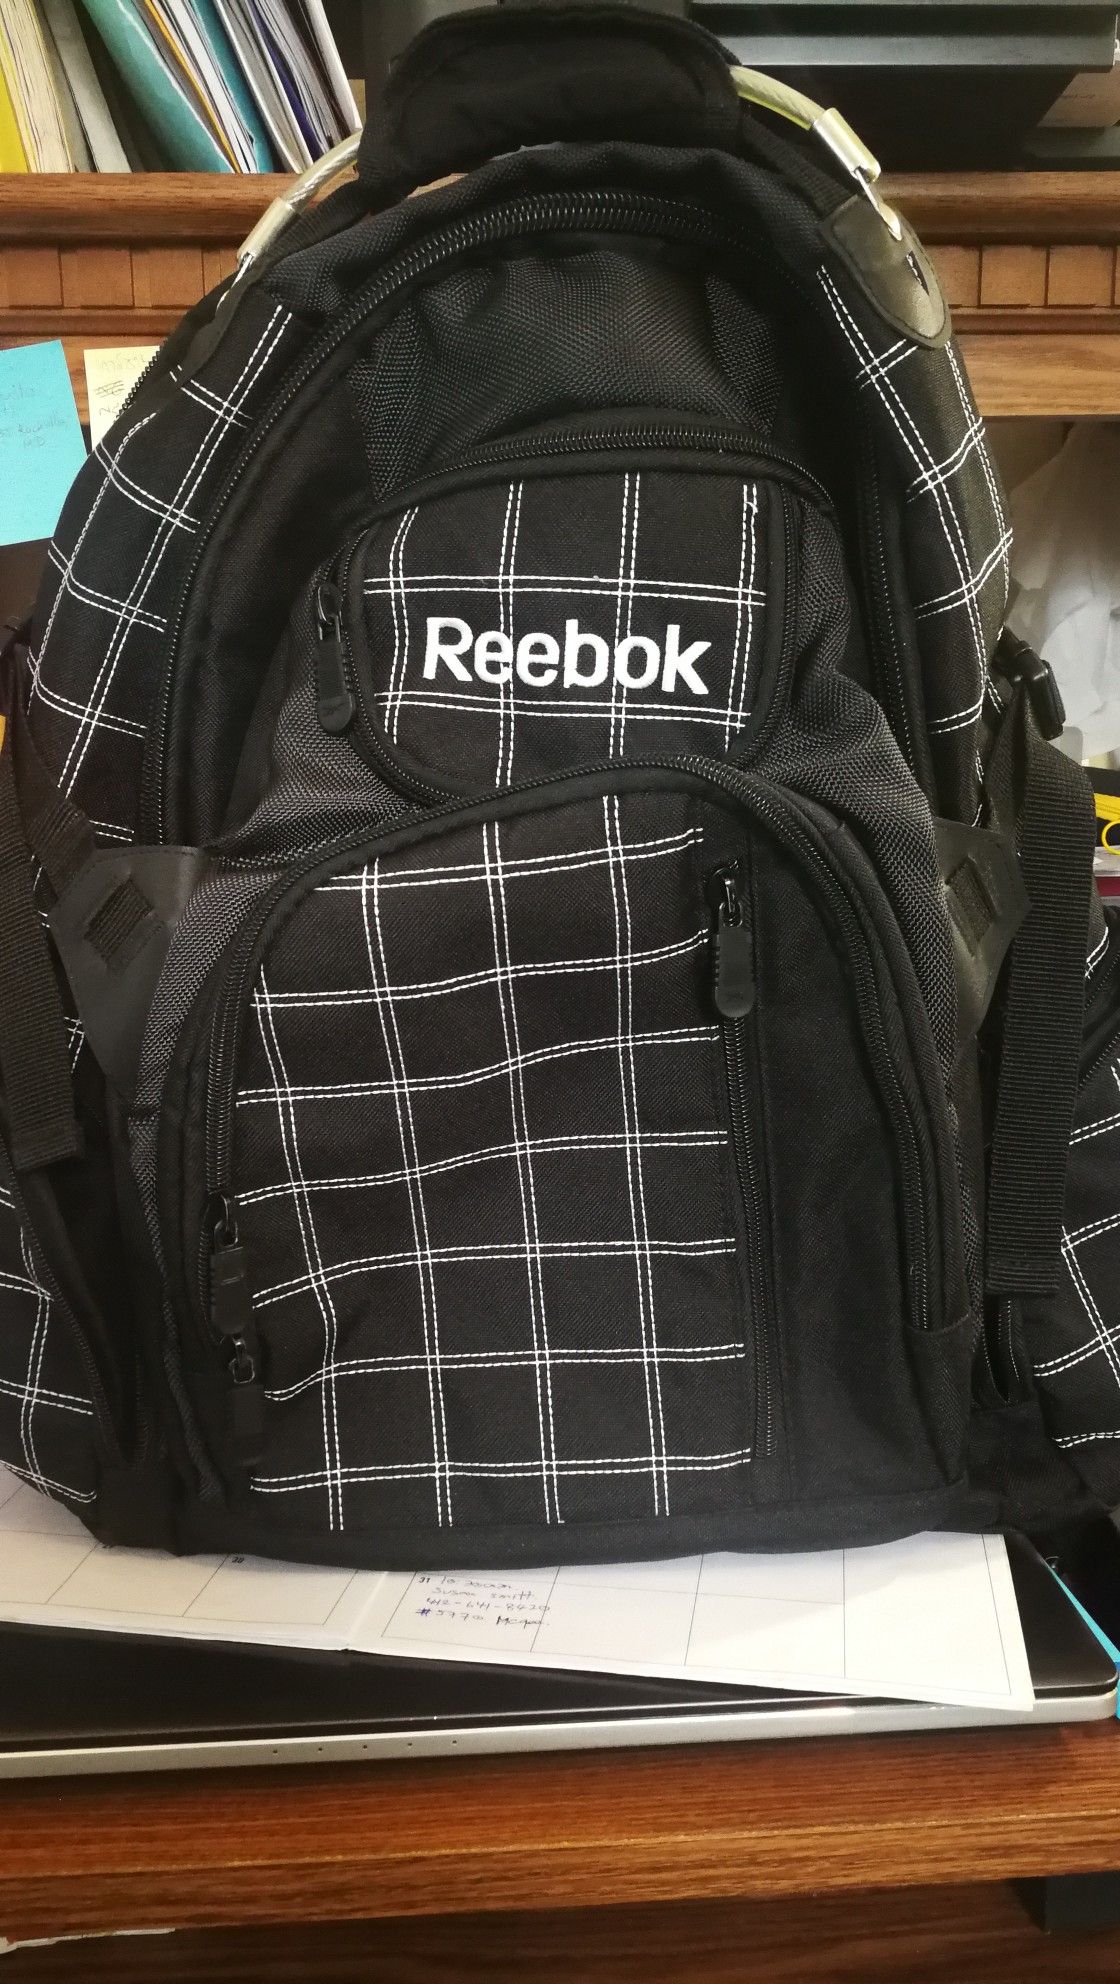 Reebok like new laptop school day Pack hiking Backpack